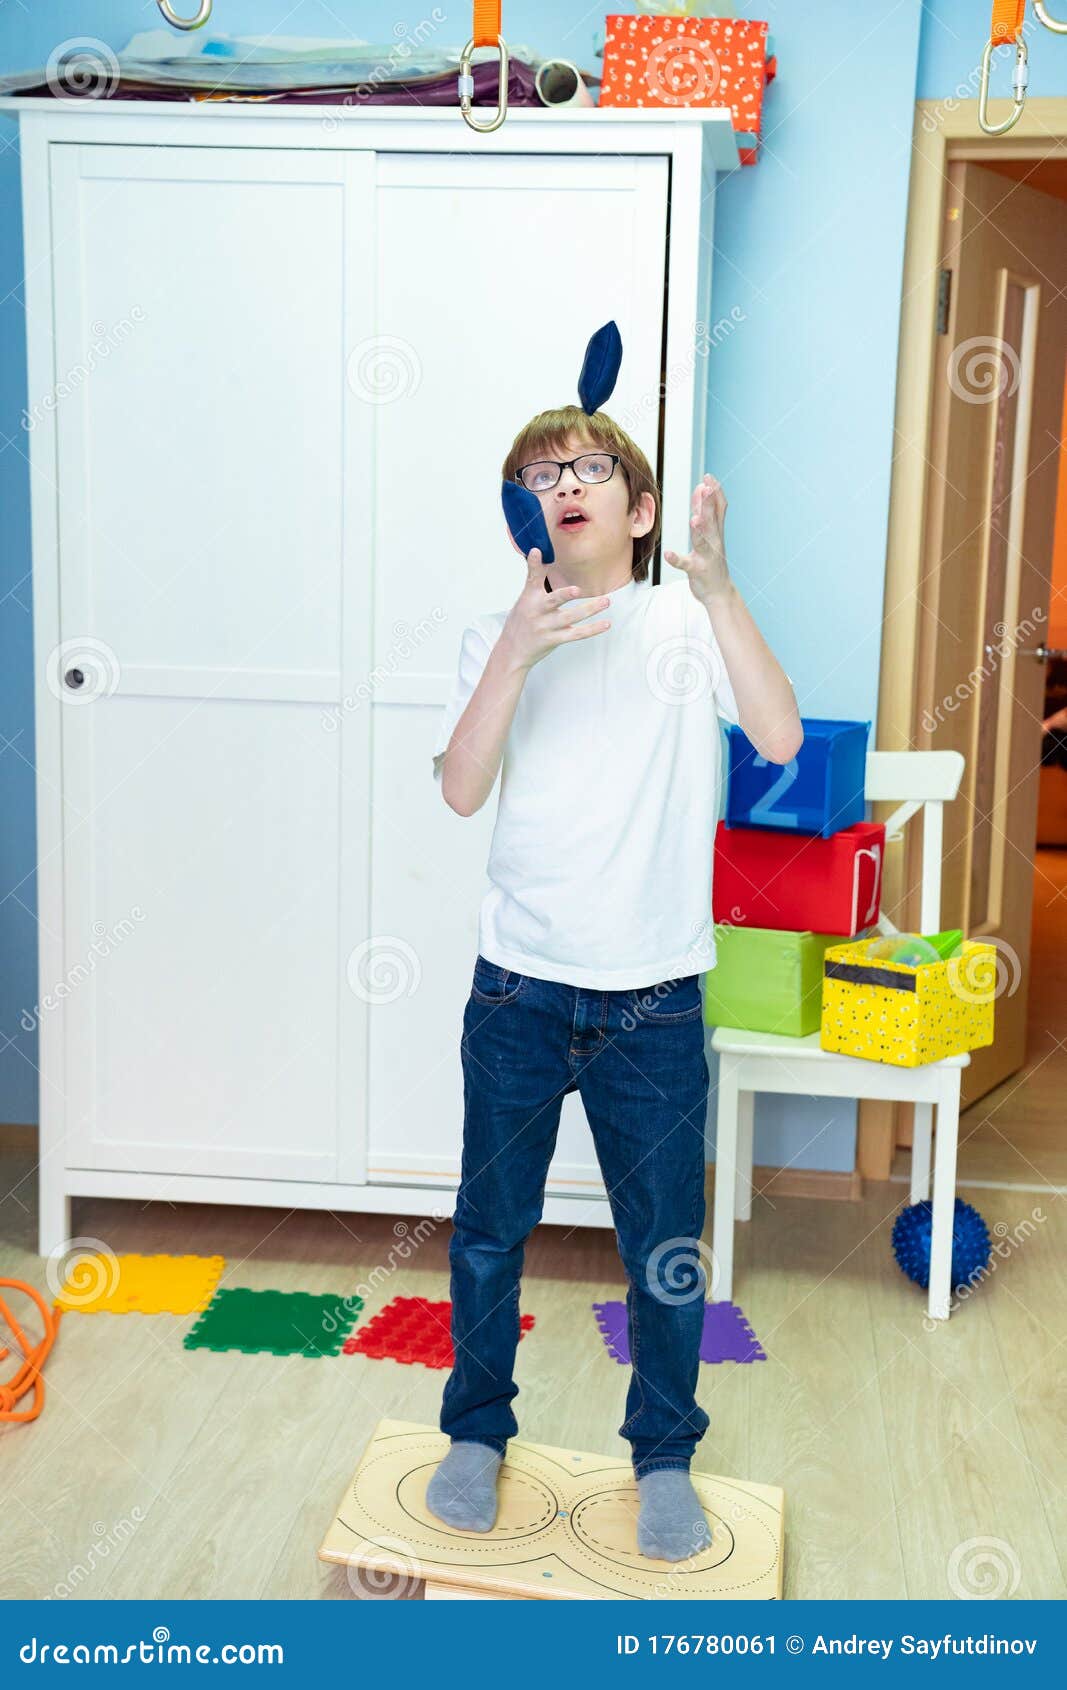 a boy on balancing platform sensory integration